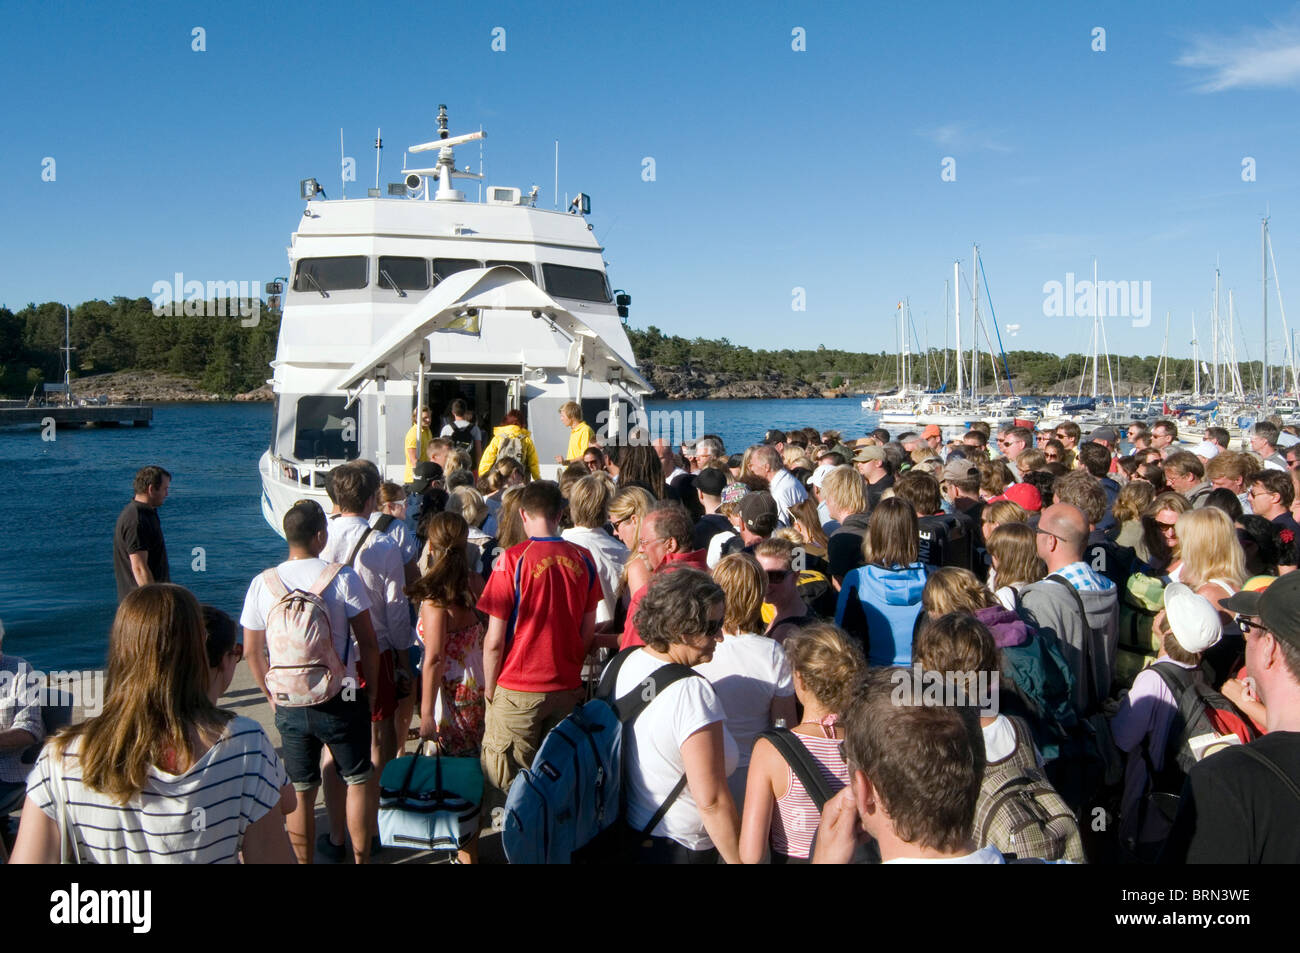 ferry ferries in stockholm archipelagos archipelago islands island hoping passenger passengers tourists tourism sandhamn ride sw Stock Photo